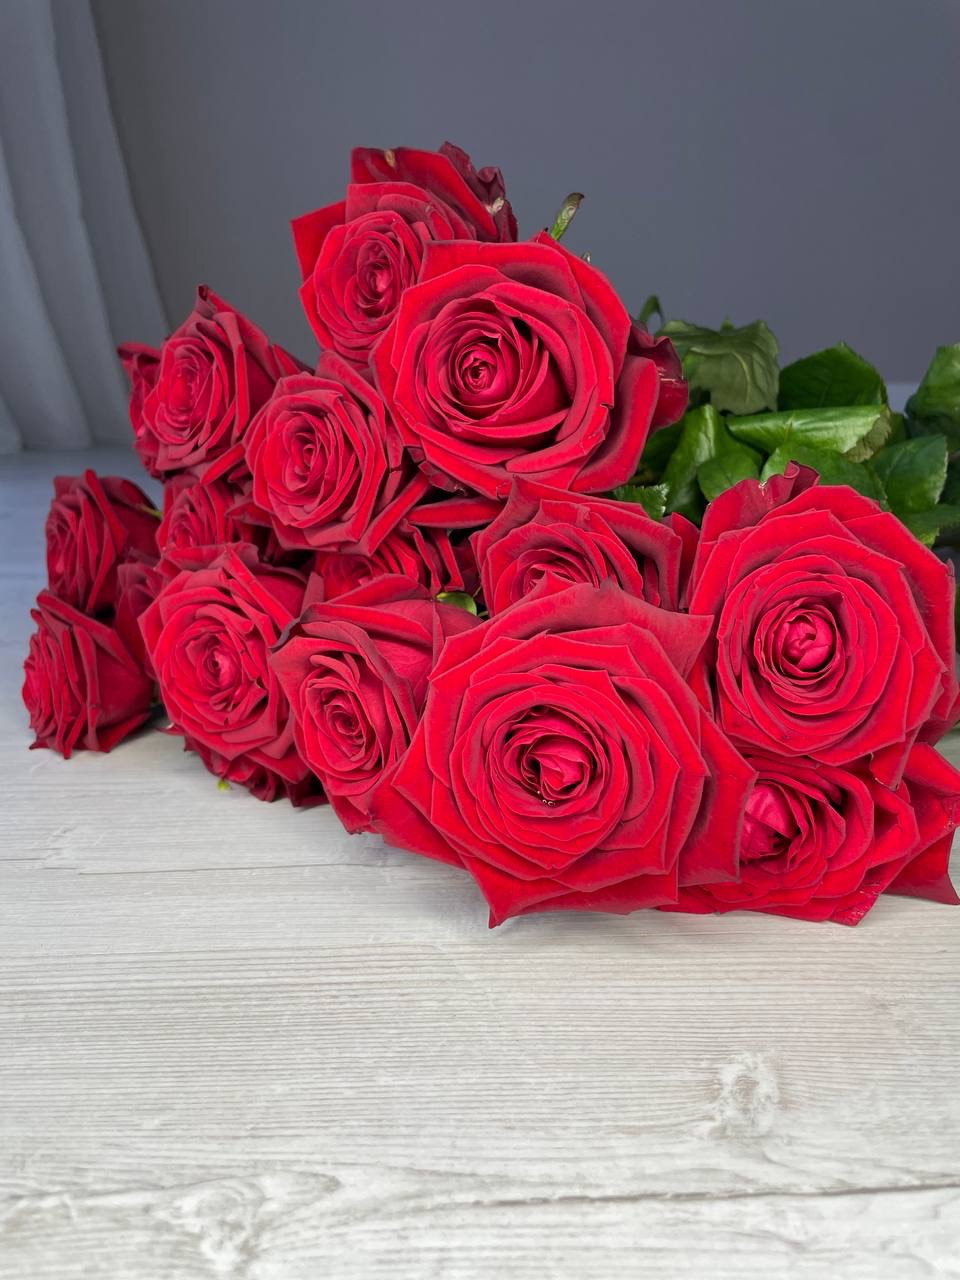 Роза Ред Наоми - 120 ₽, заказать онлайн.